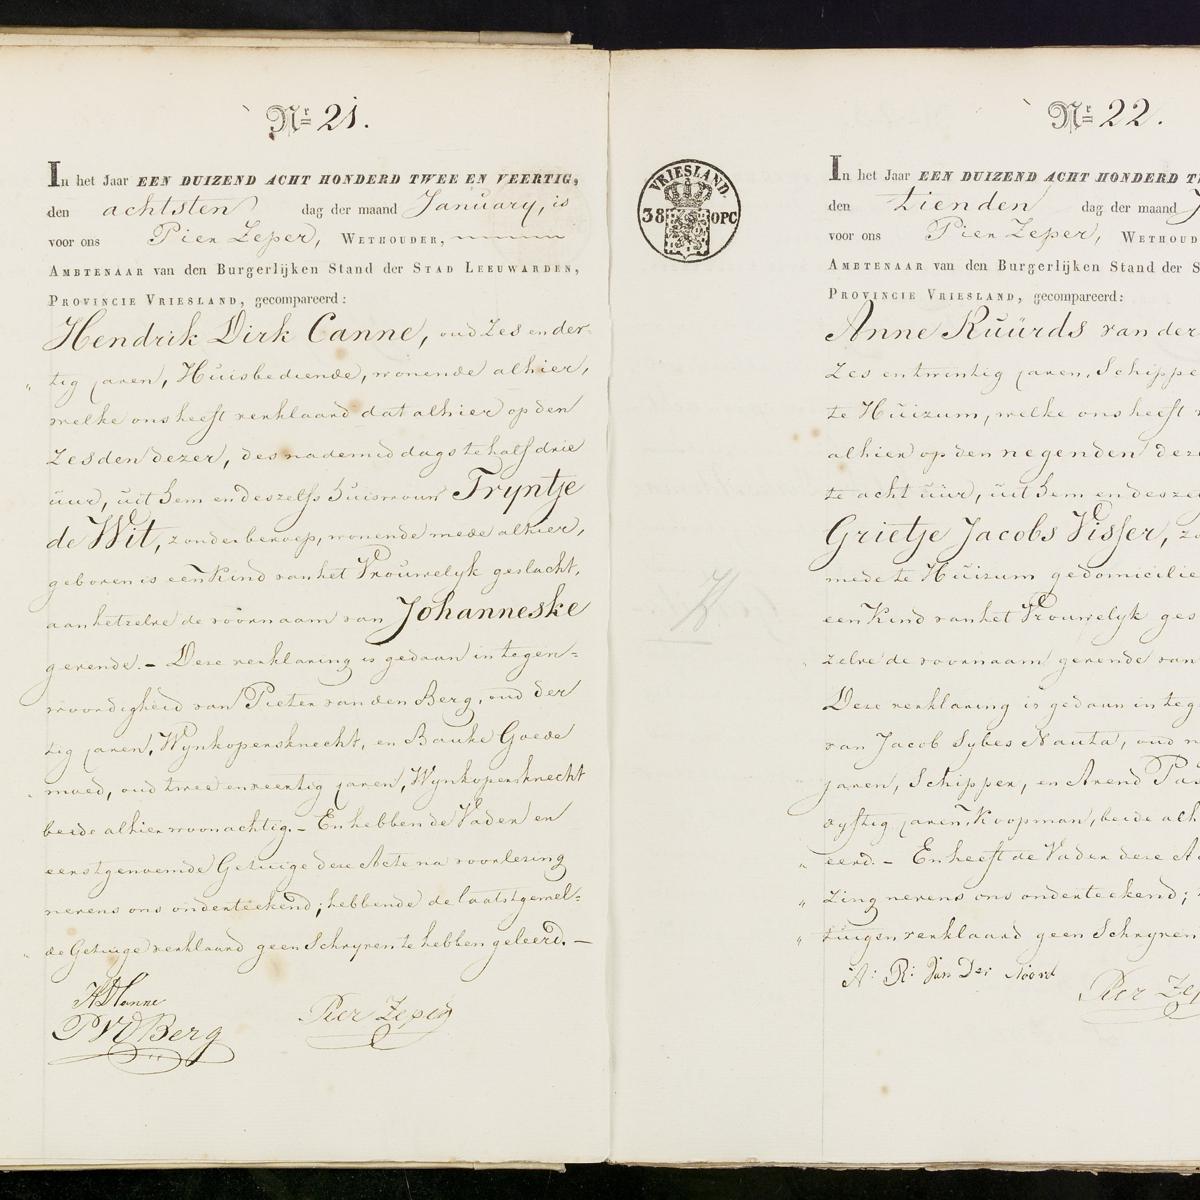 Civil registry of births, Leeuwarden, 1842, records 21-22